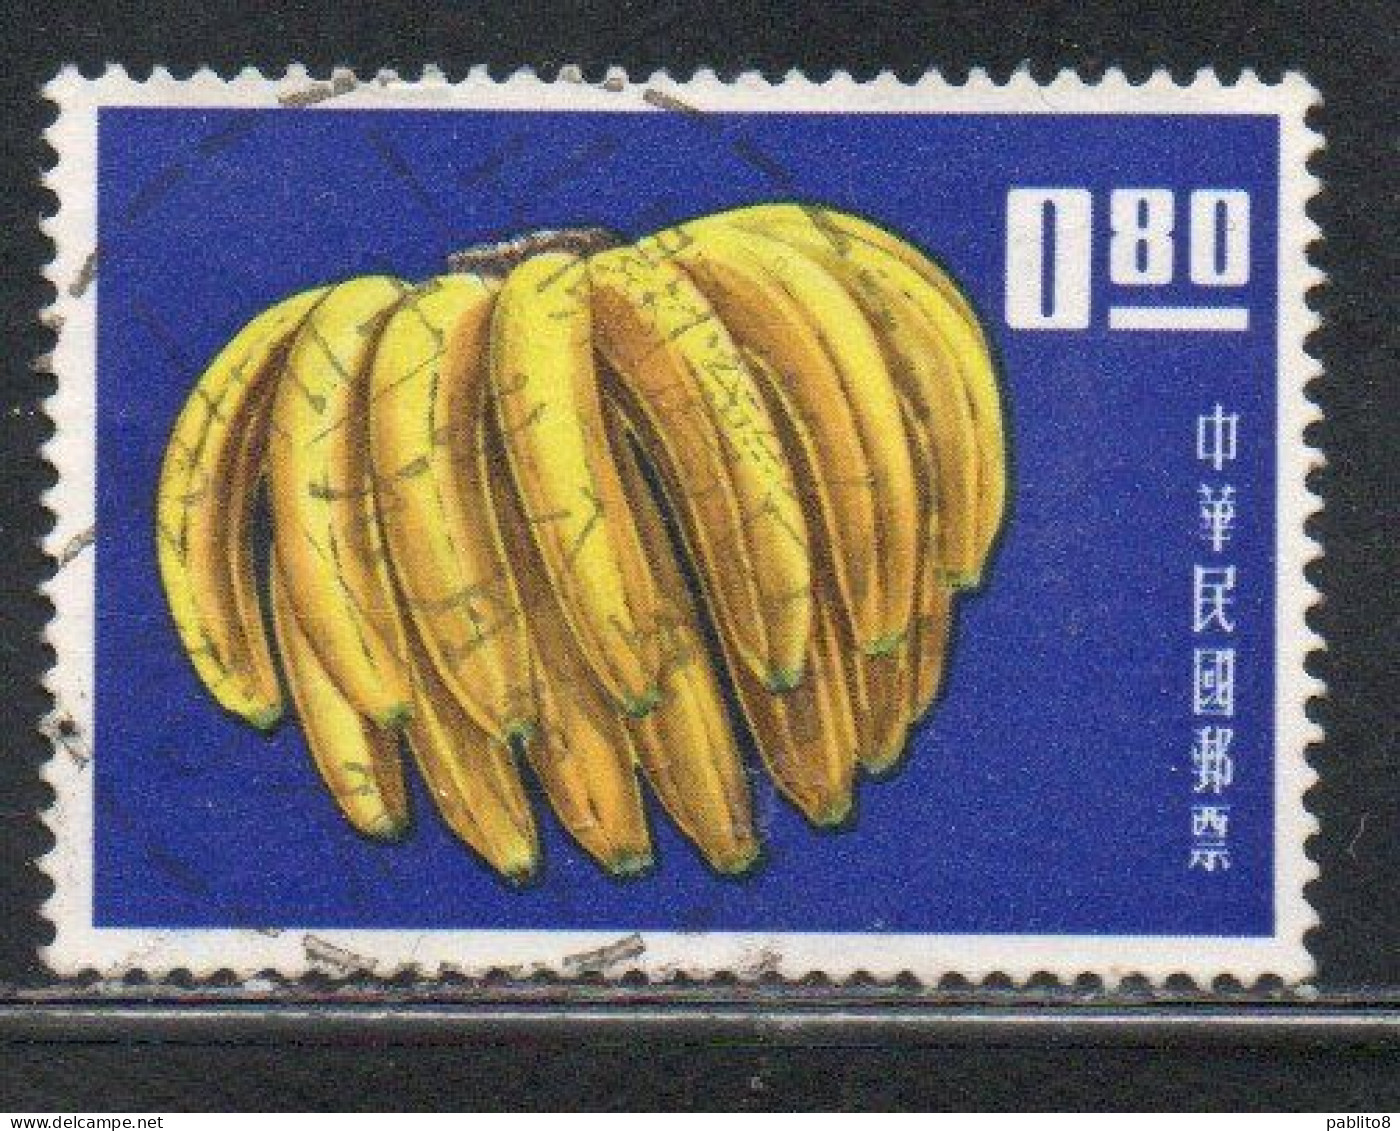 CHINA REPUBLIC CINA TAIWAN FORMOSA 1964 FRUITS BANANAS BANANA FRUIT 80c USED USATO OBLITERE' - Oblitérés